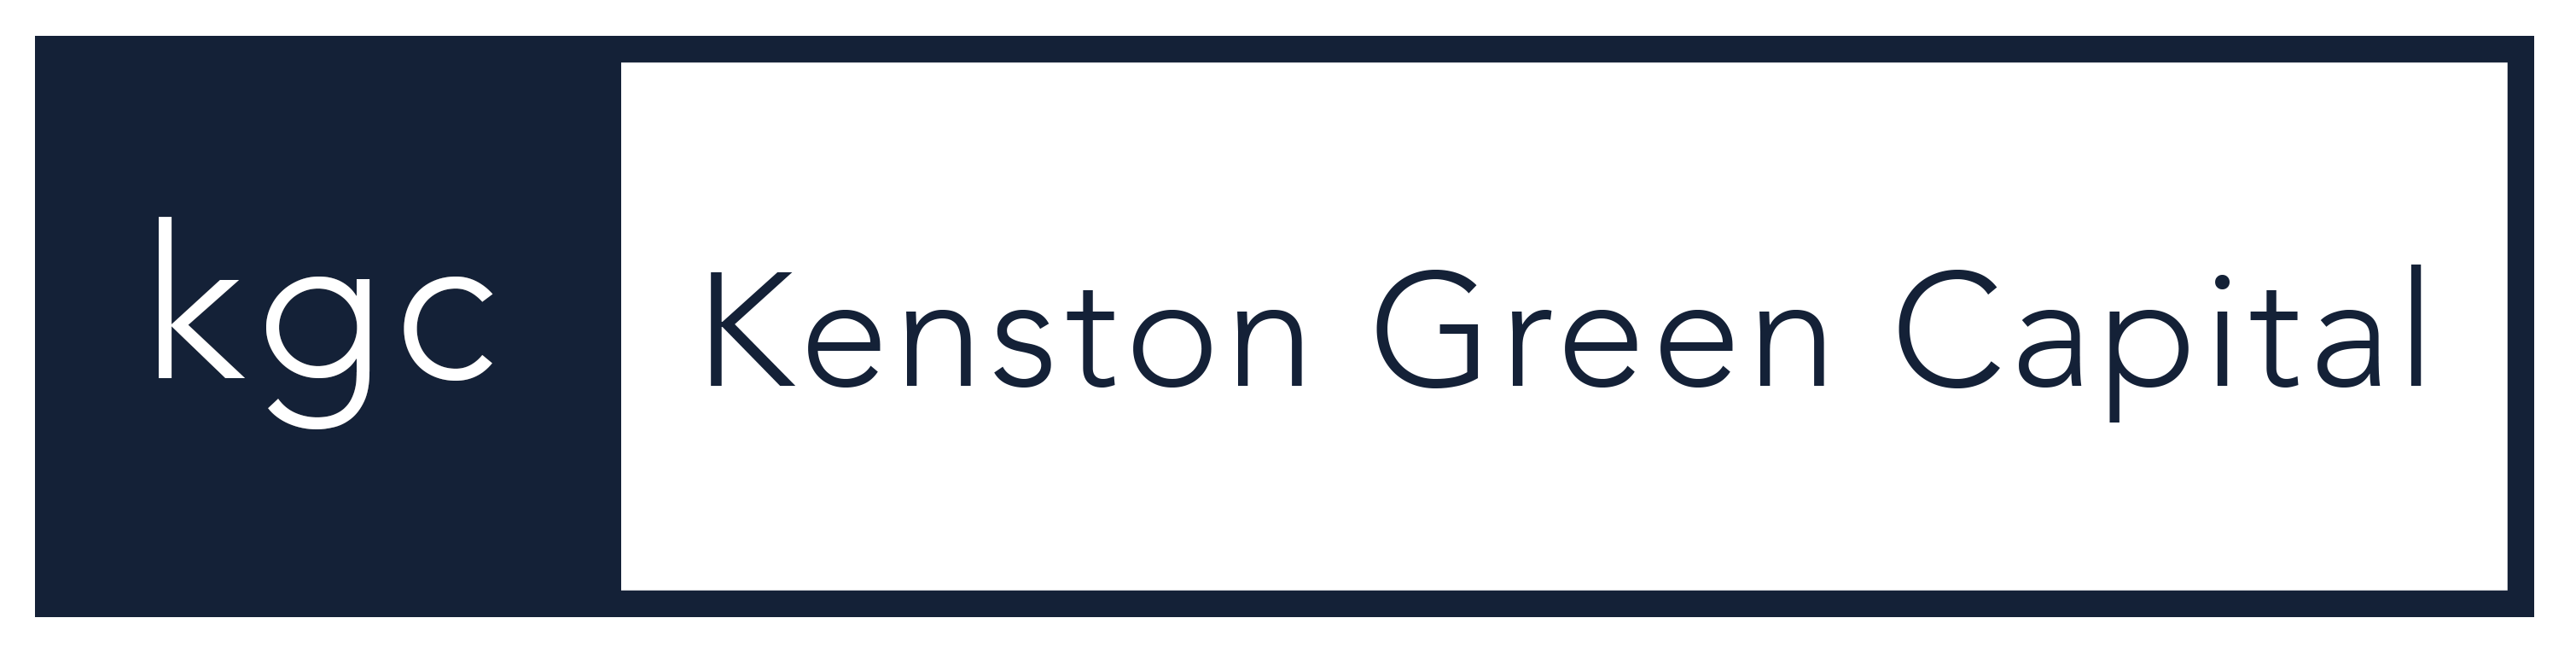 Kenston Green Capital